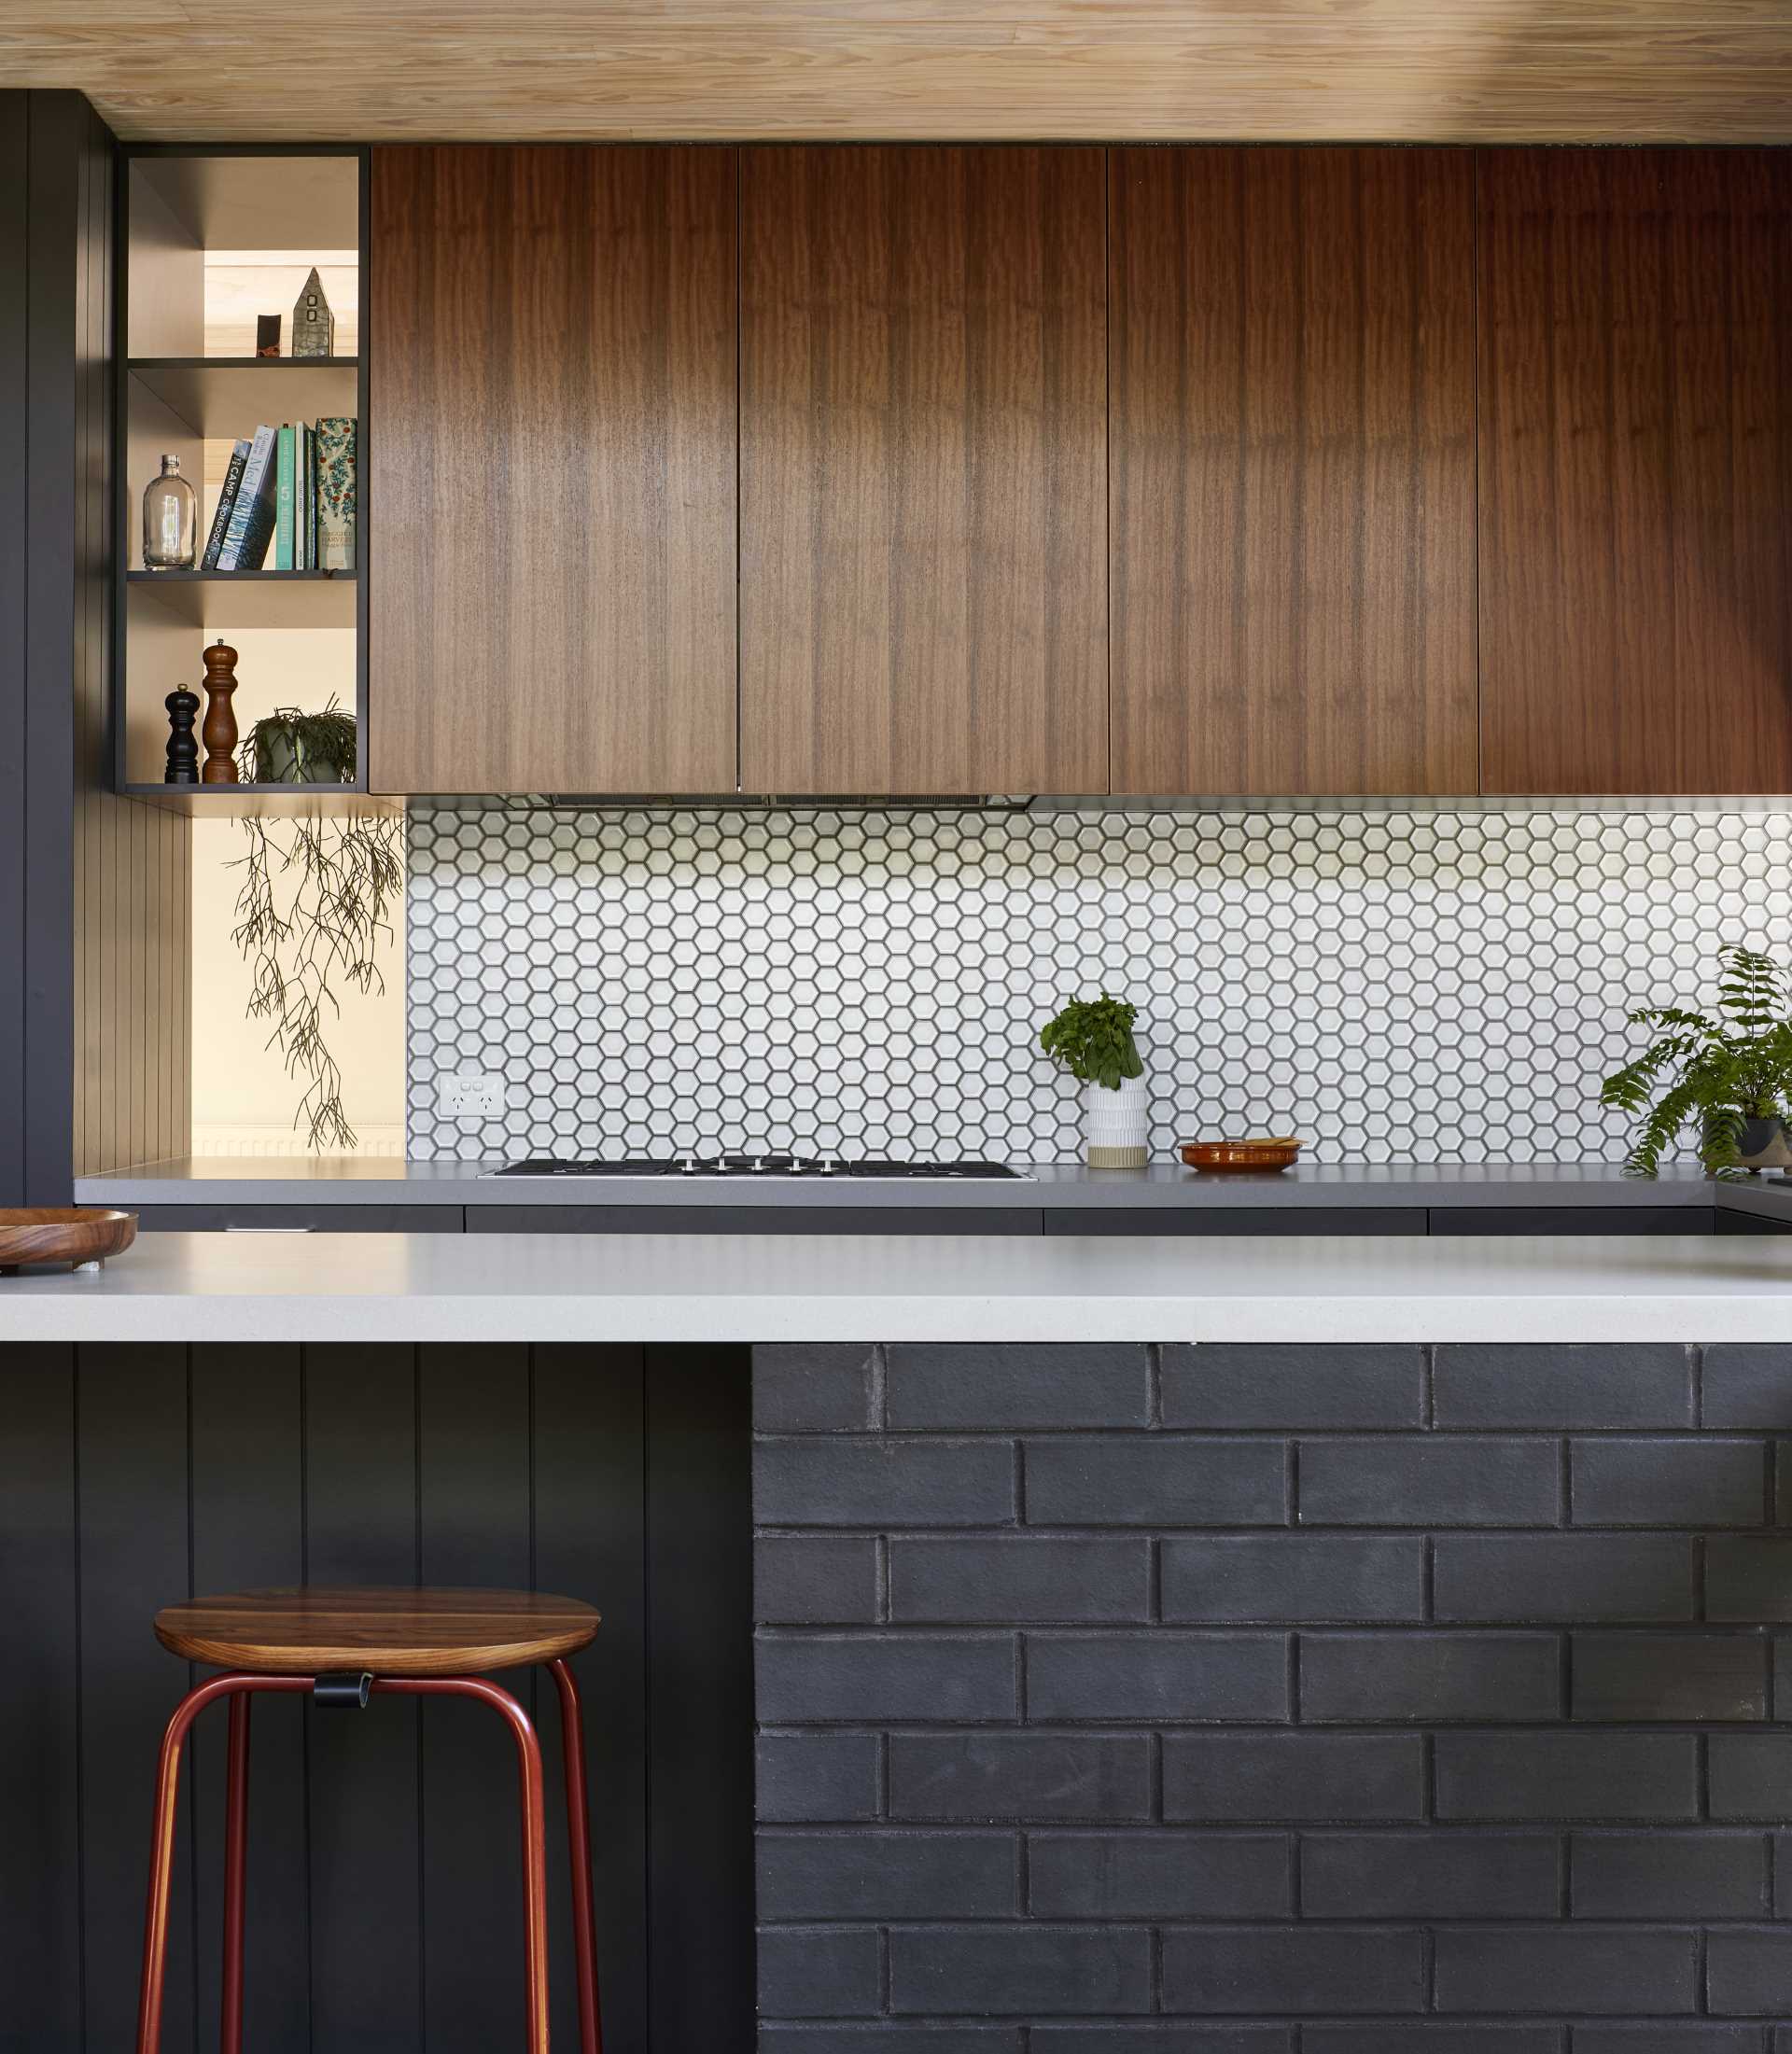 A modern kitchen with wood cabinets, dark grey bricks, and a hexagonal tile backsplash.